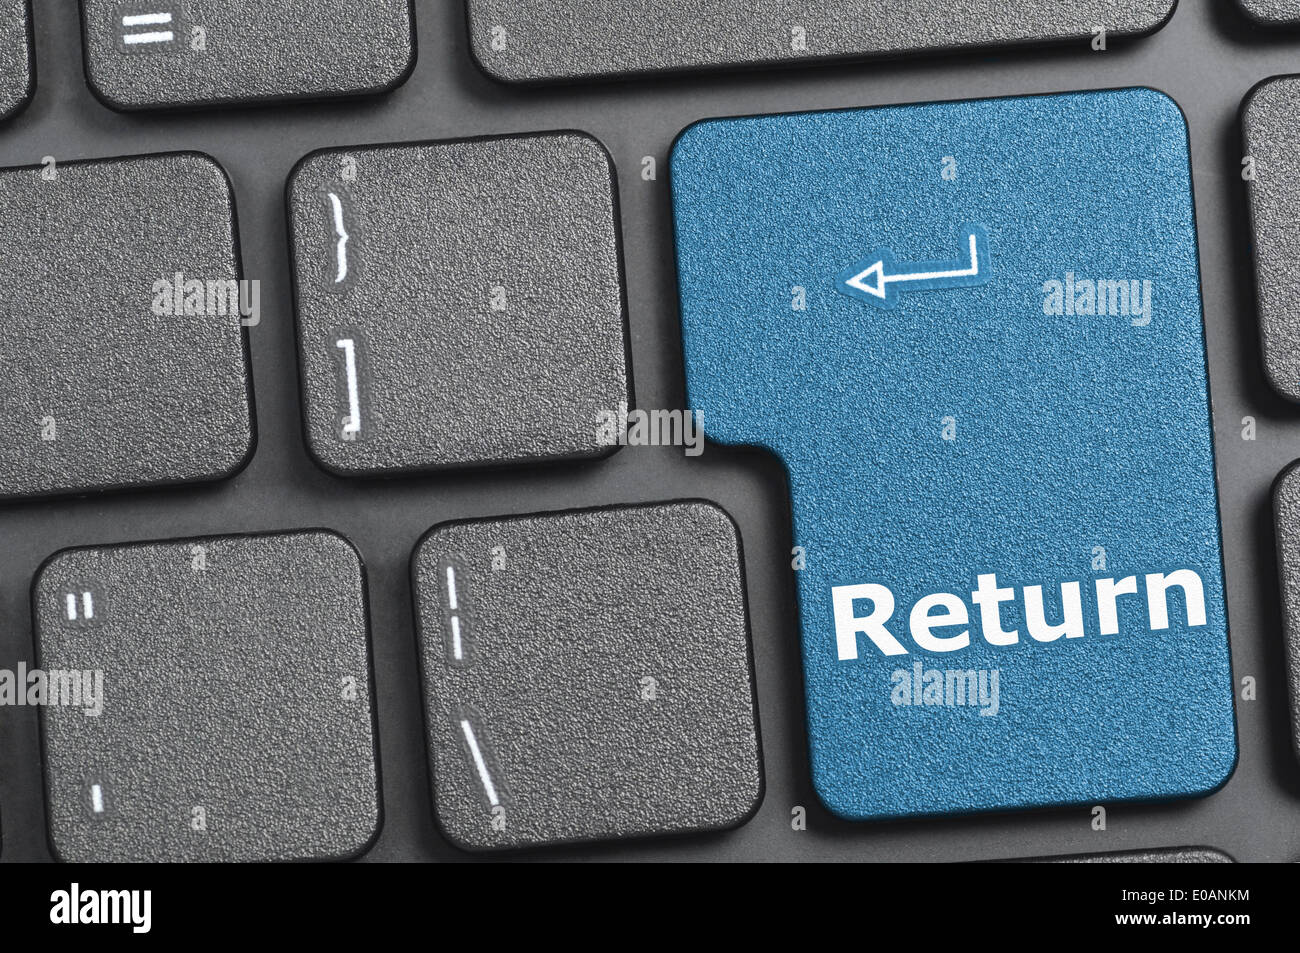 Return key on keyboard Stock Photo - Alamy